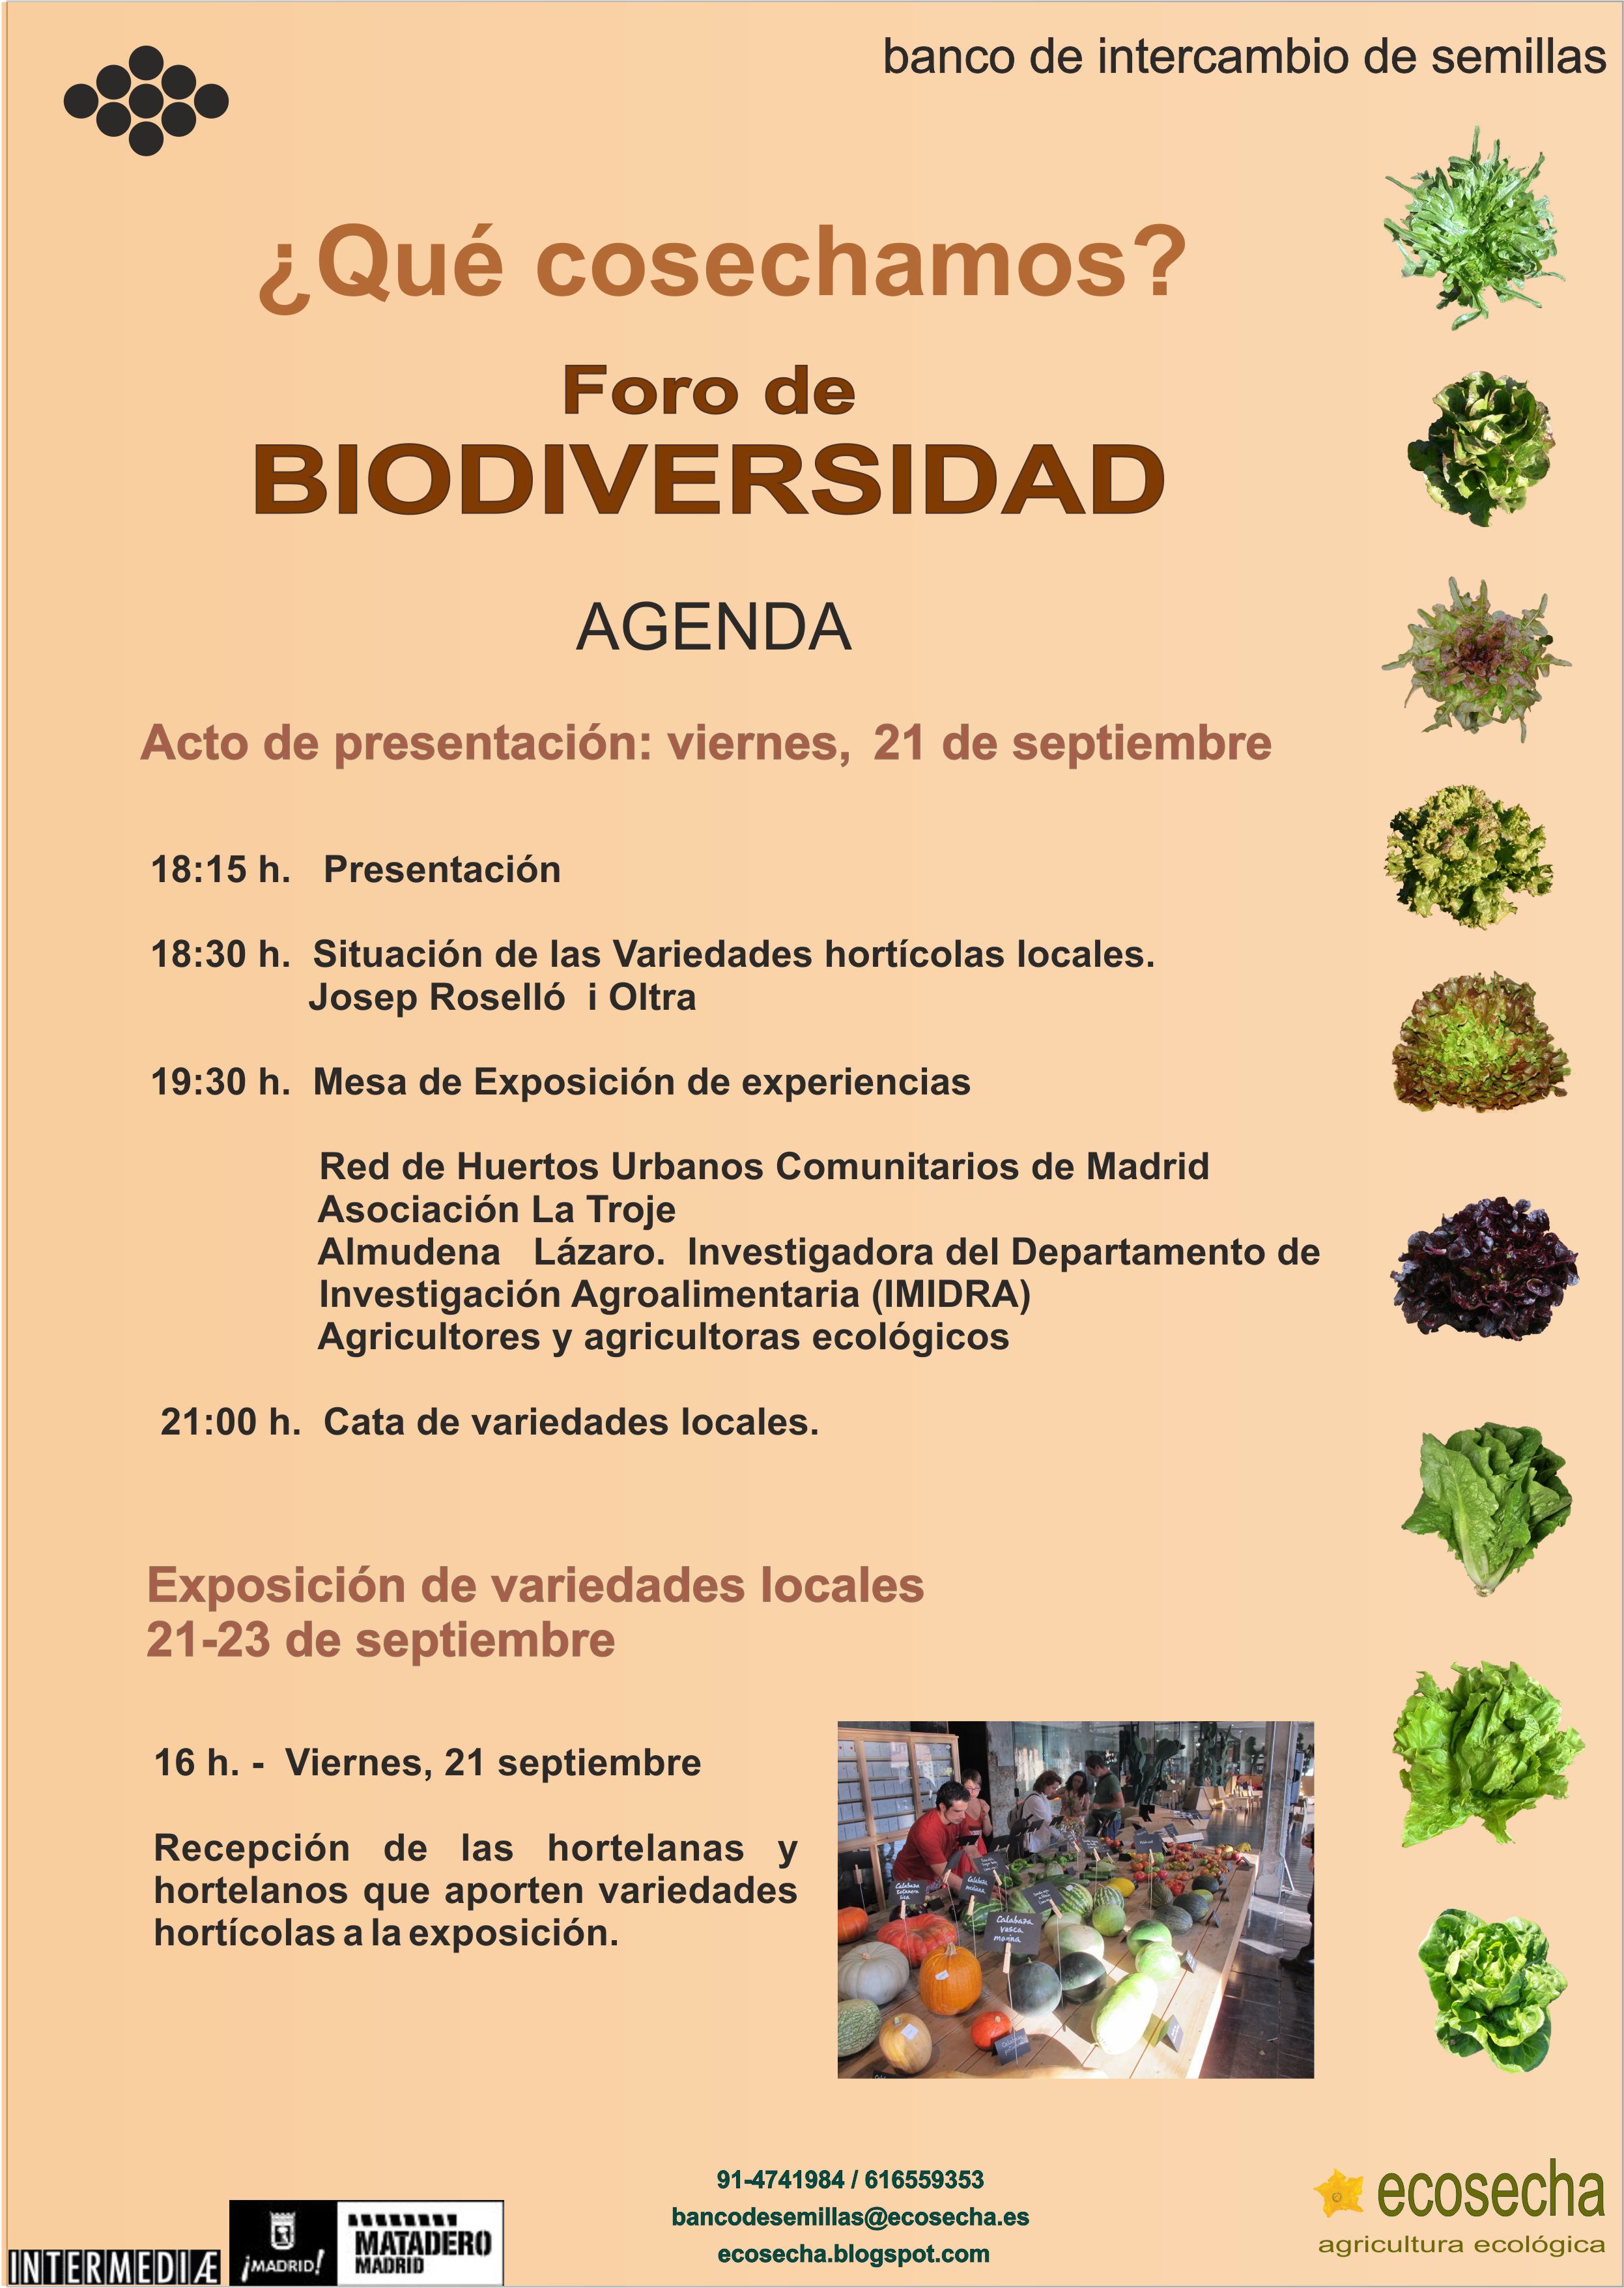 agenda-foro-biodiversidad-2012-a-4-2.jpg